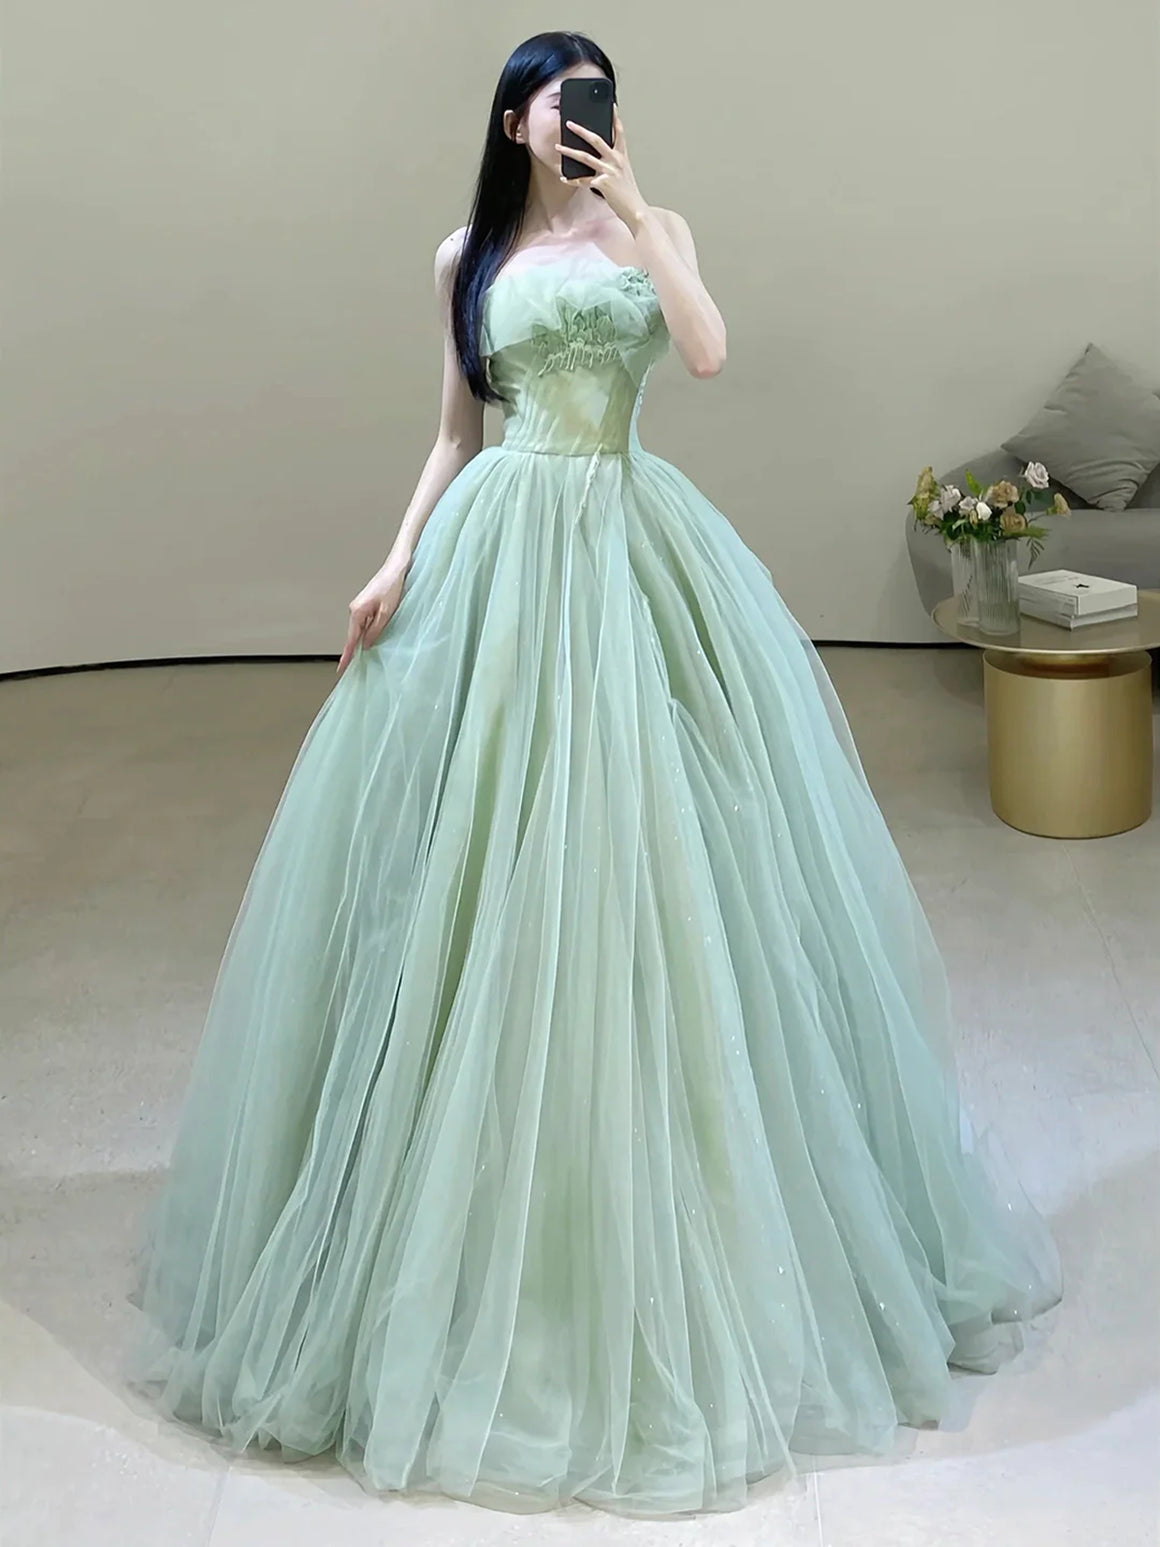 Strapless Green Tulle Long Prom Dresses, Green Tulle Long Formal Evening Dresses